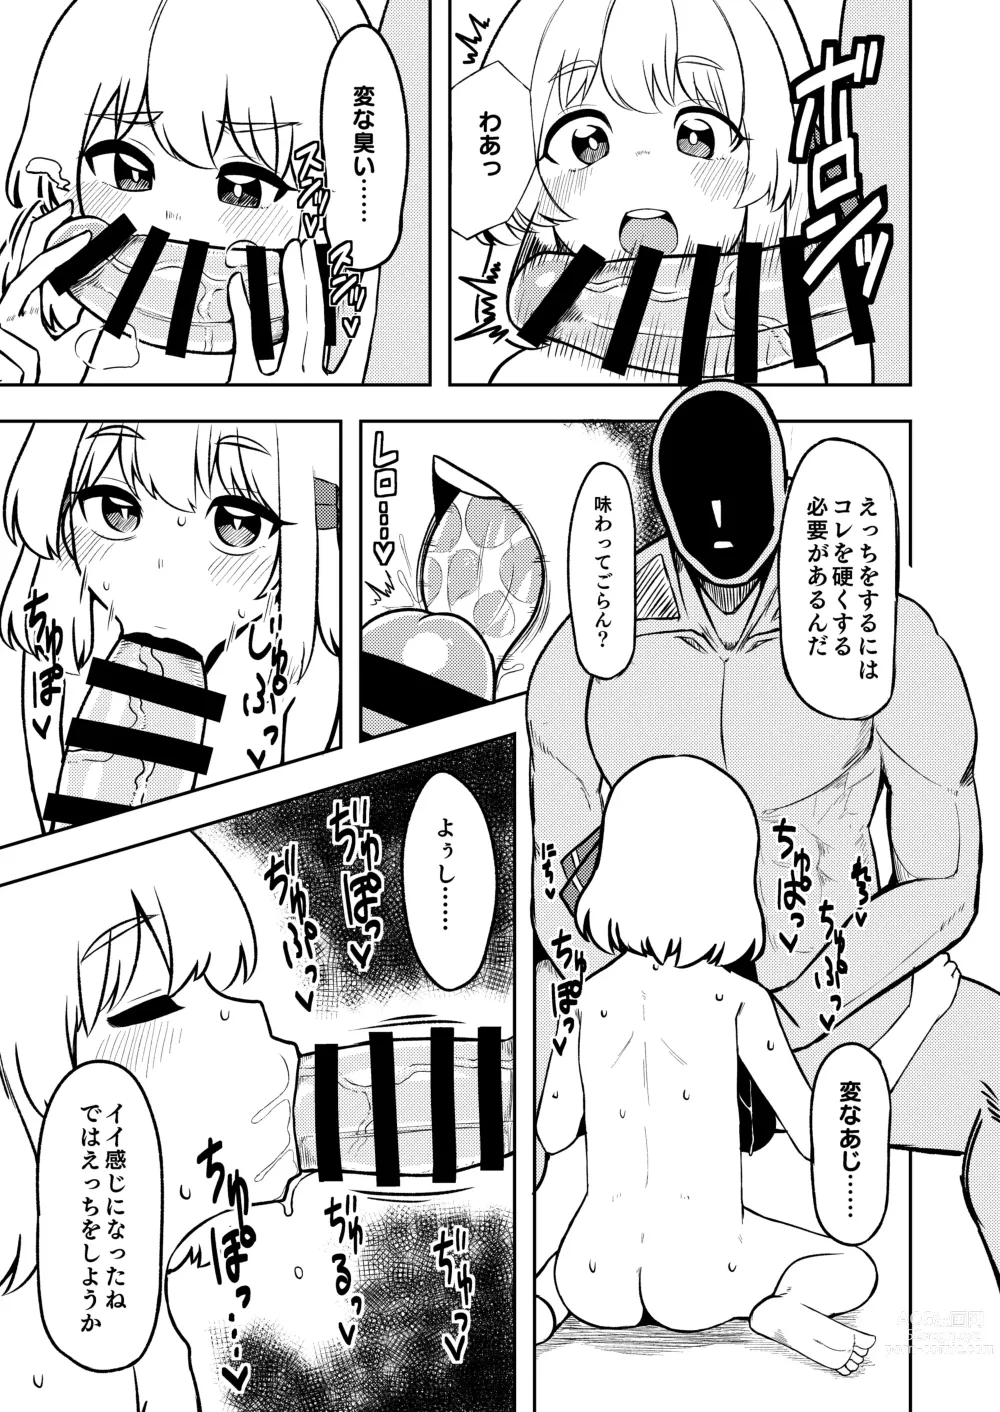 Page 8 of doujinshi Beware of Monsters at Dusk